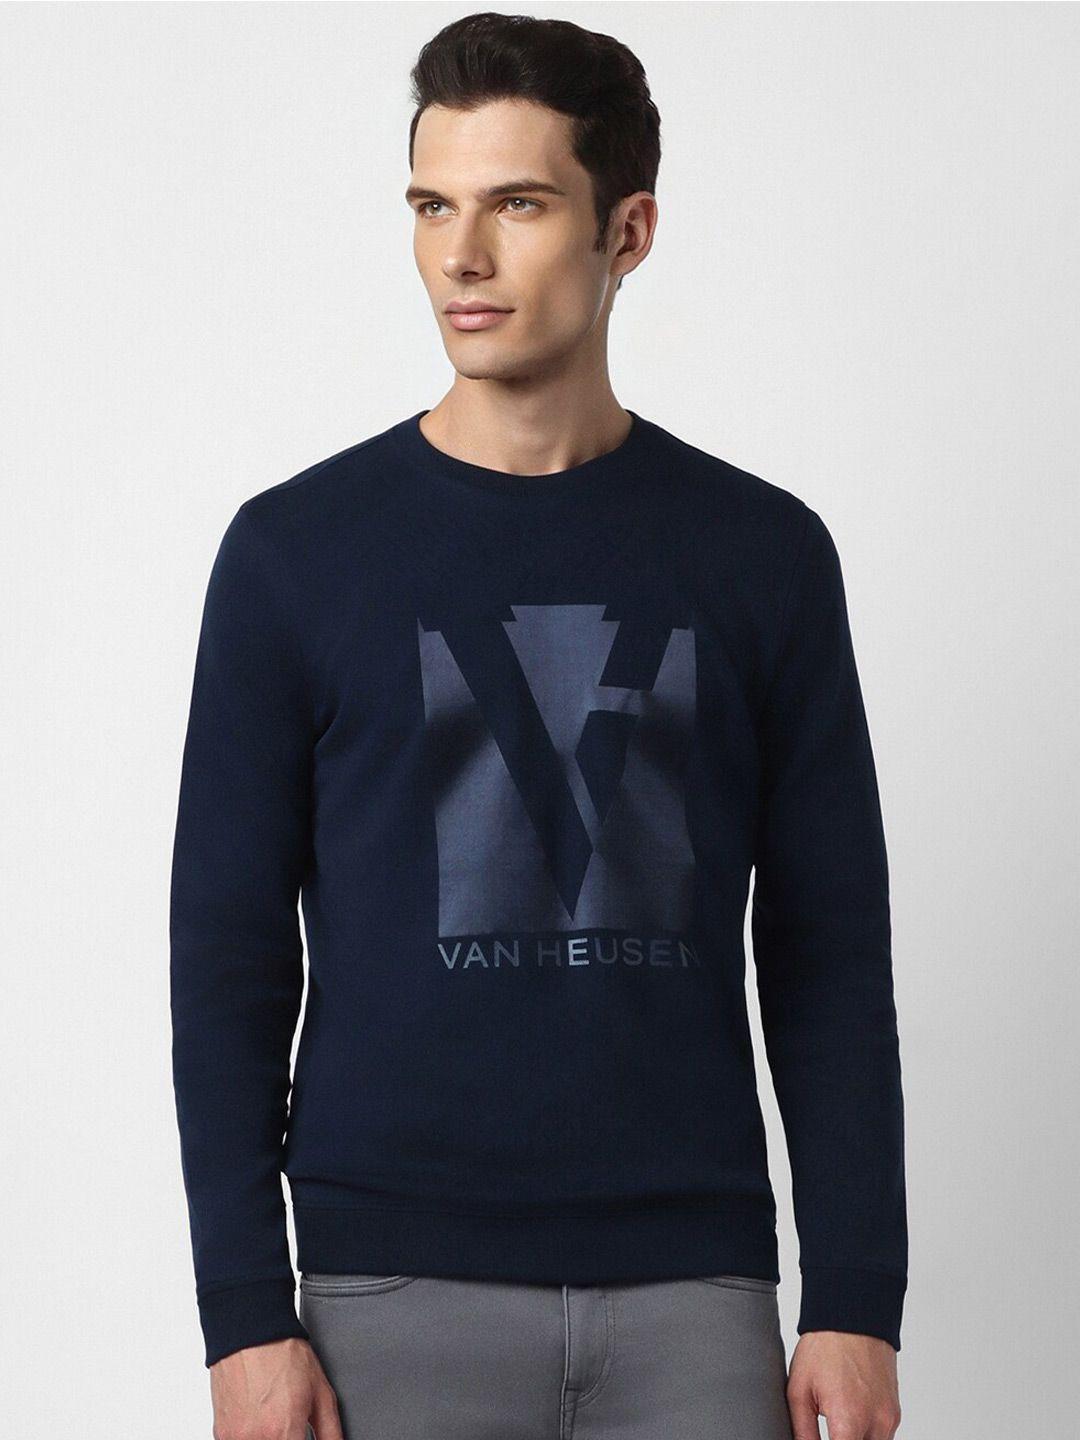 v dot graphic printed sweatshirt